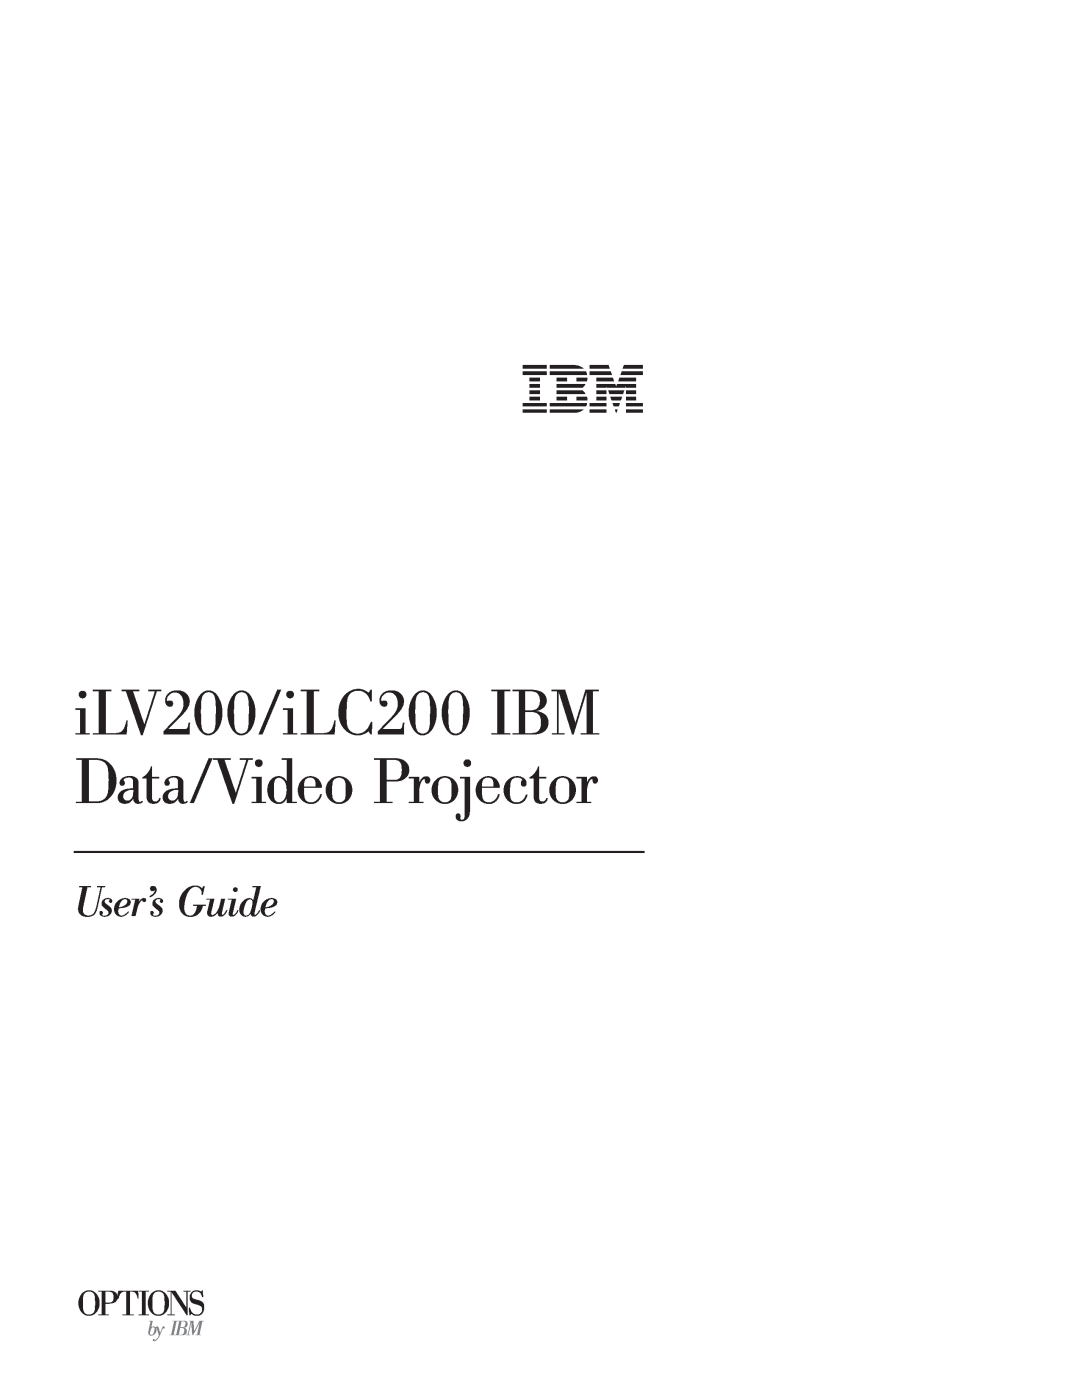 IBM ILC200, ILV200 manual iLV200/iLC200 IBM Data/Video Projector, User’s Guide, Options, by IBM 